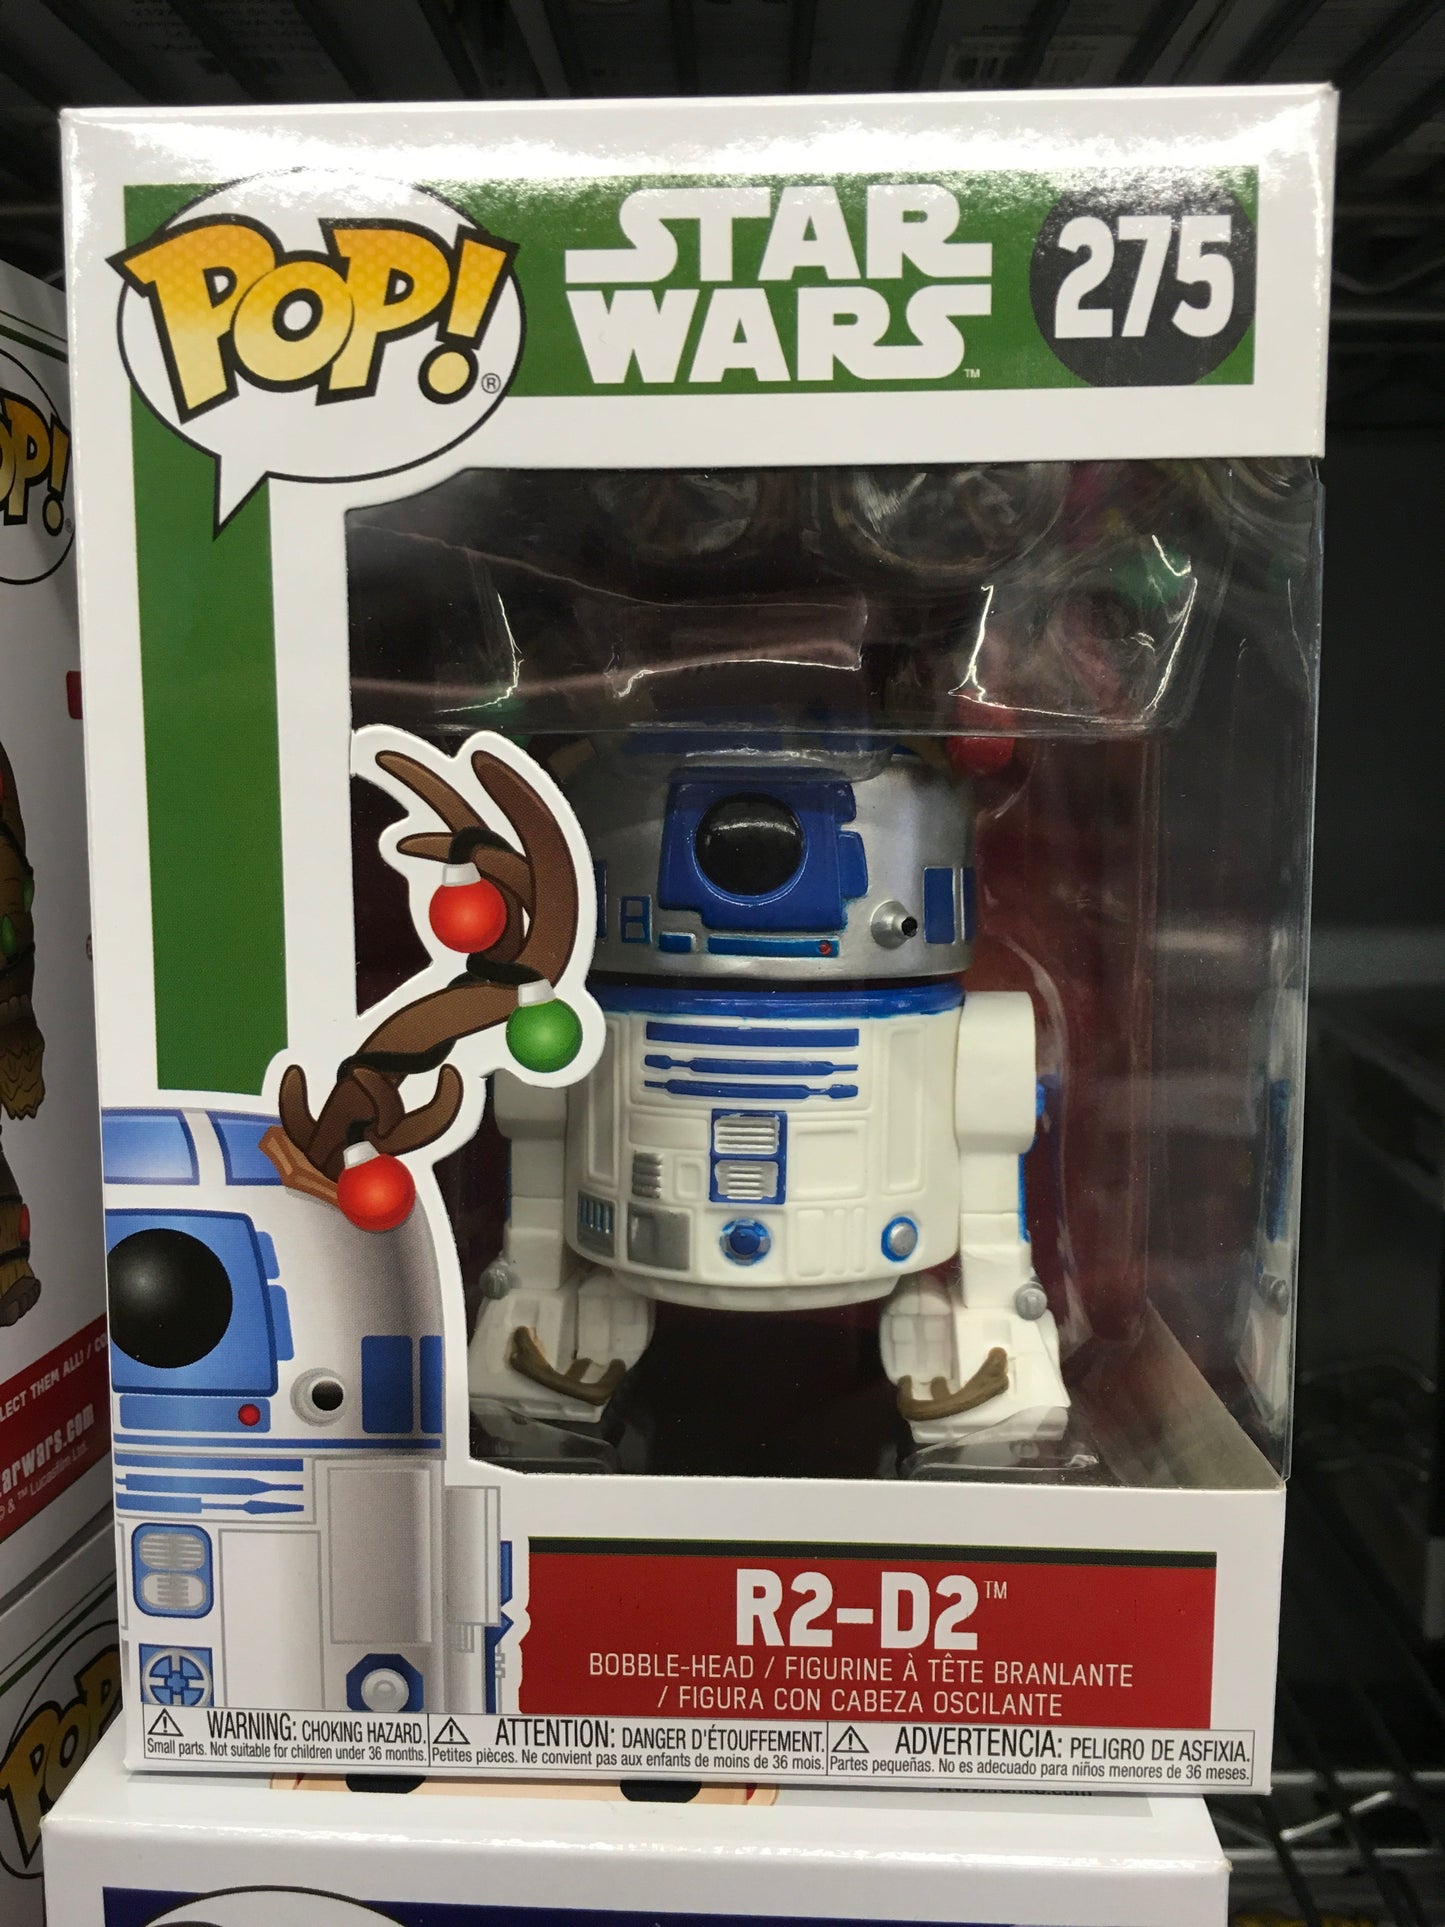 Star Wars R2-D2 Holiday Funko Pop vinyl Figure